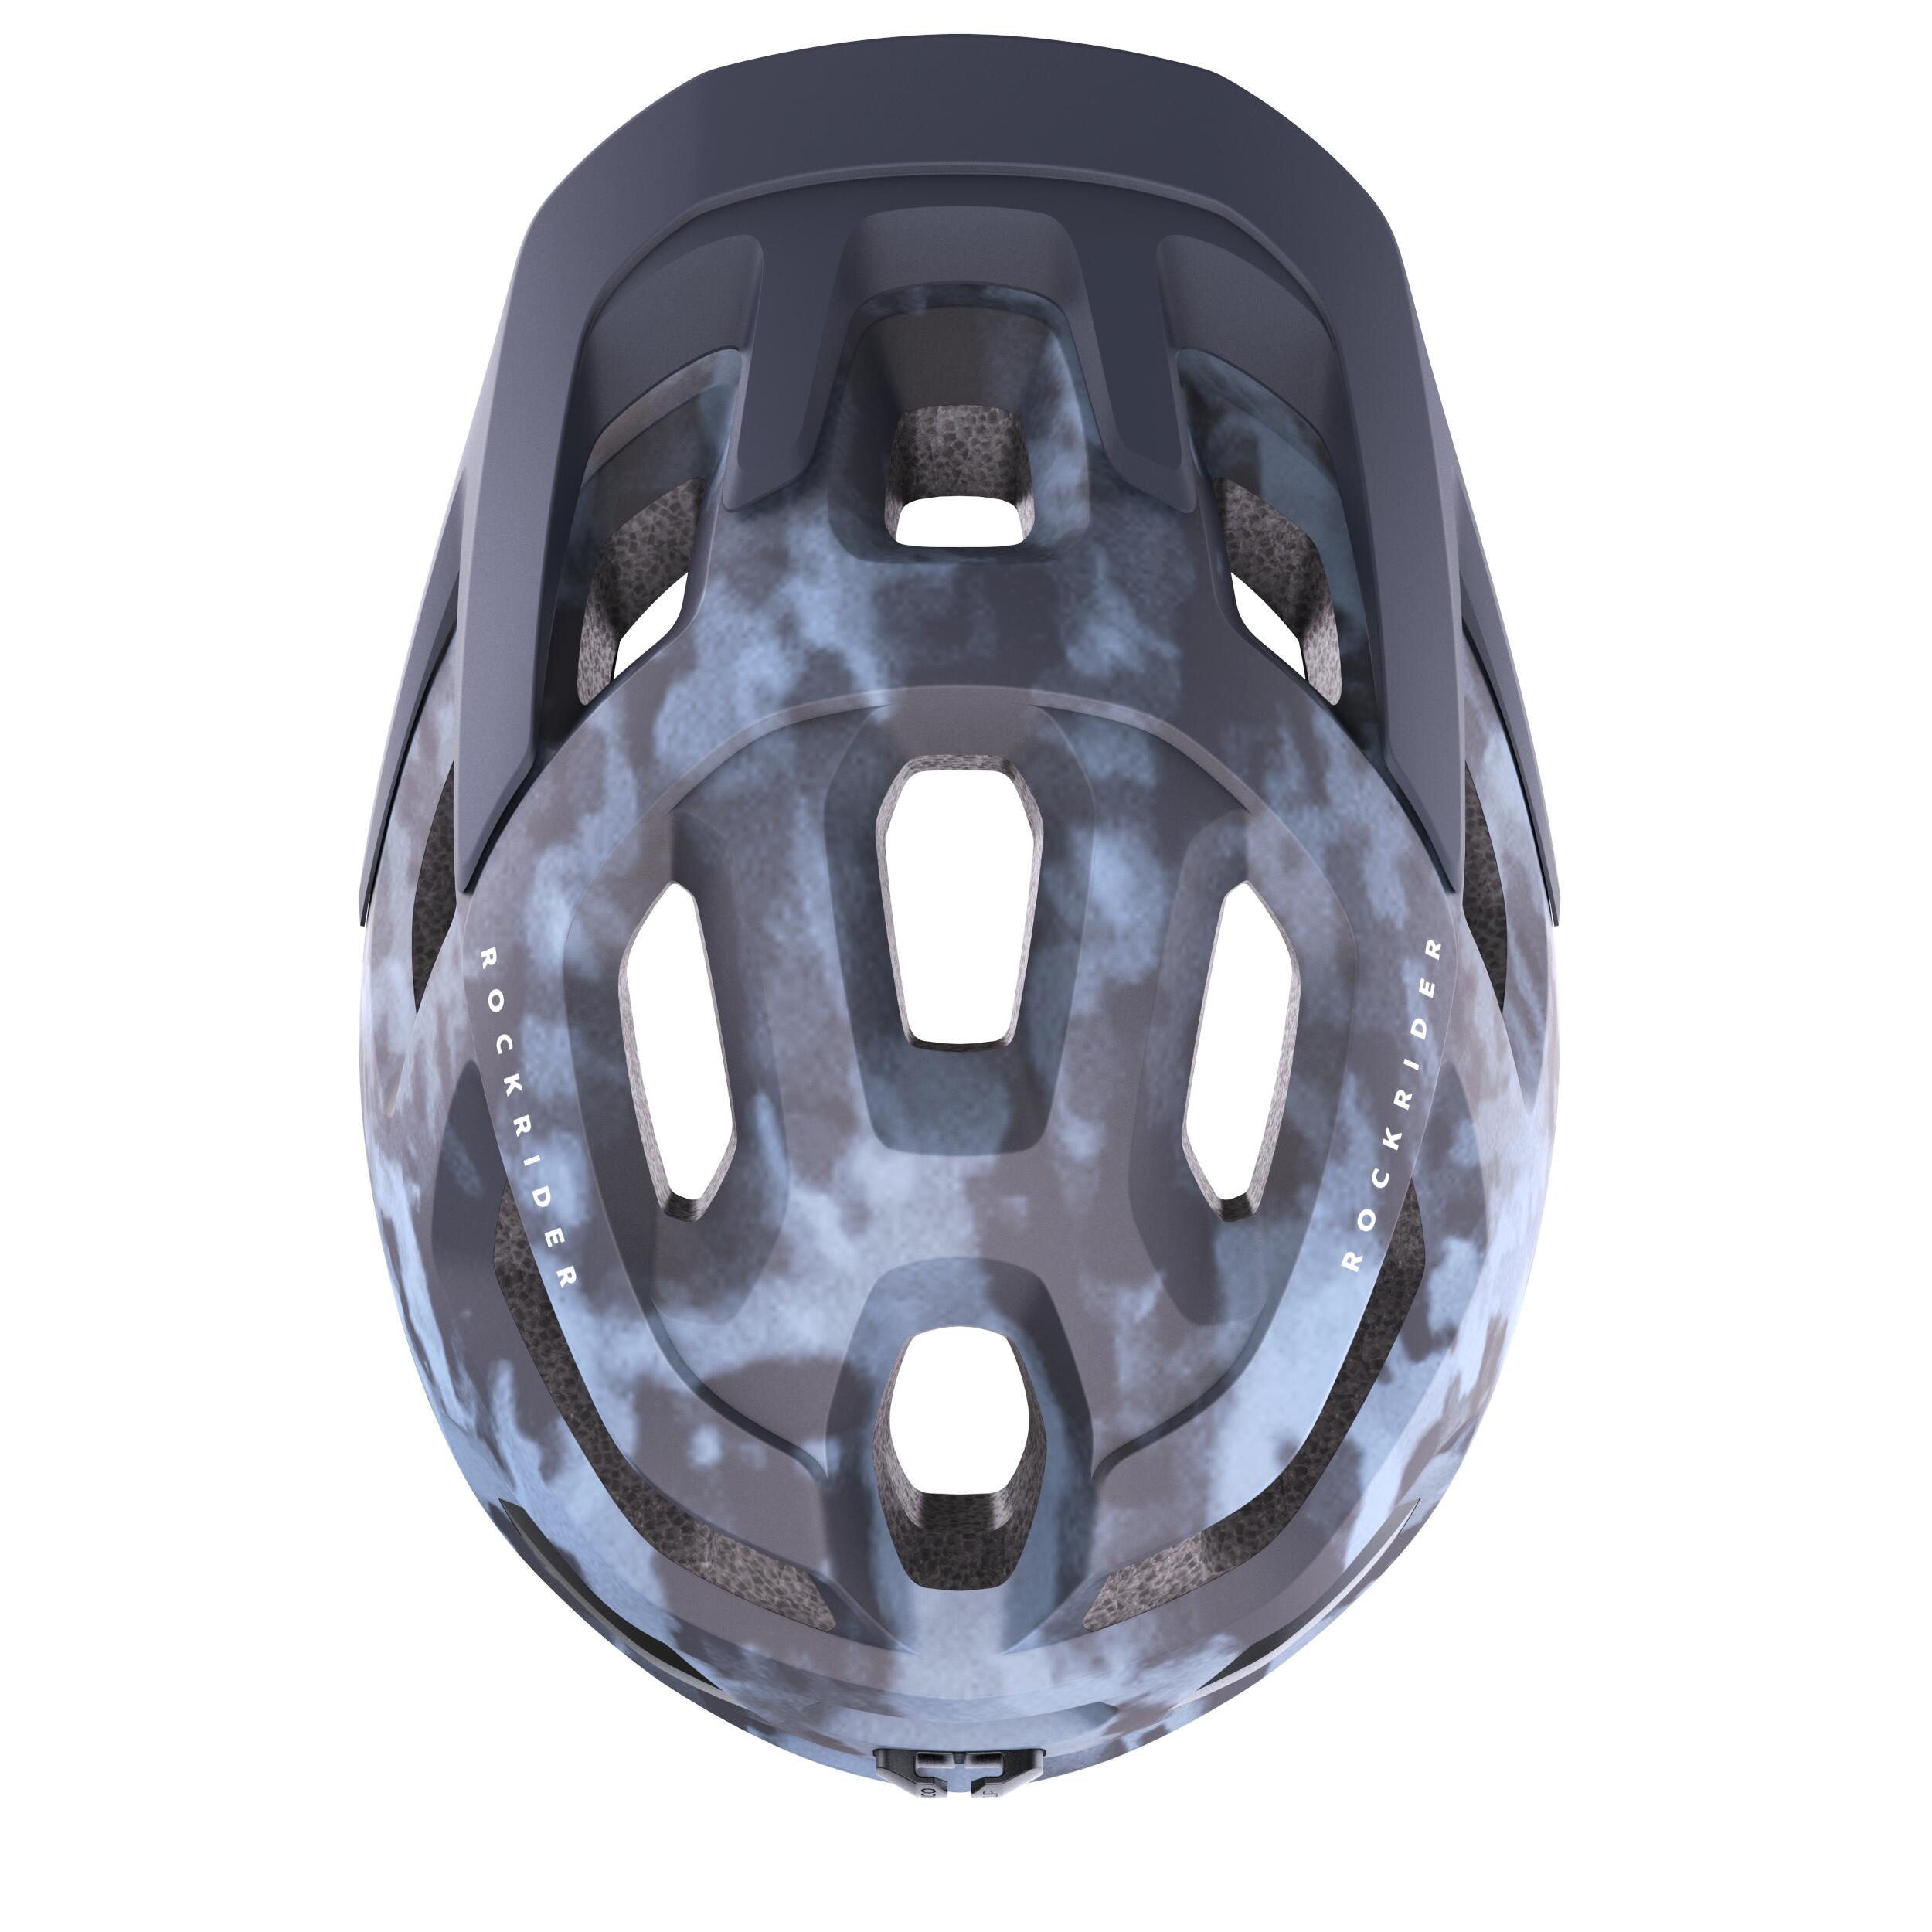 Mountain Bike Helmet EXPL 500 - Graphic Blue 14/17